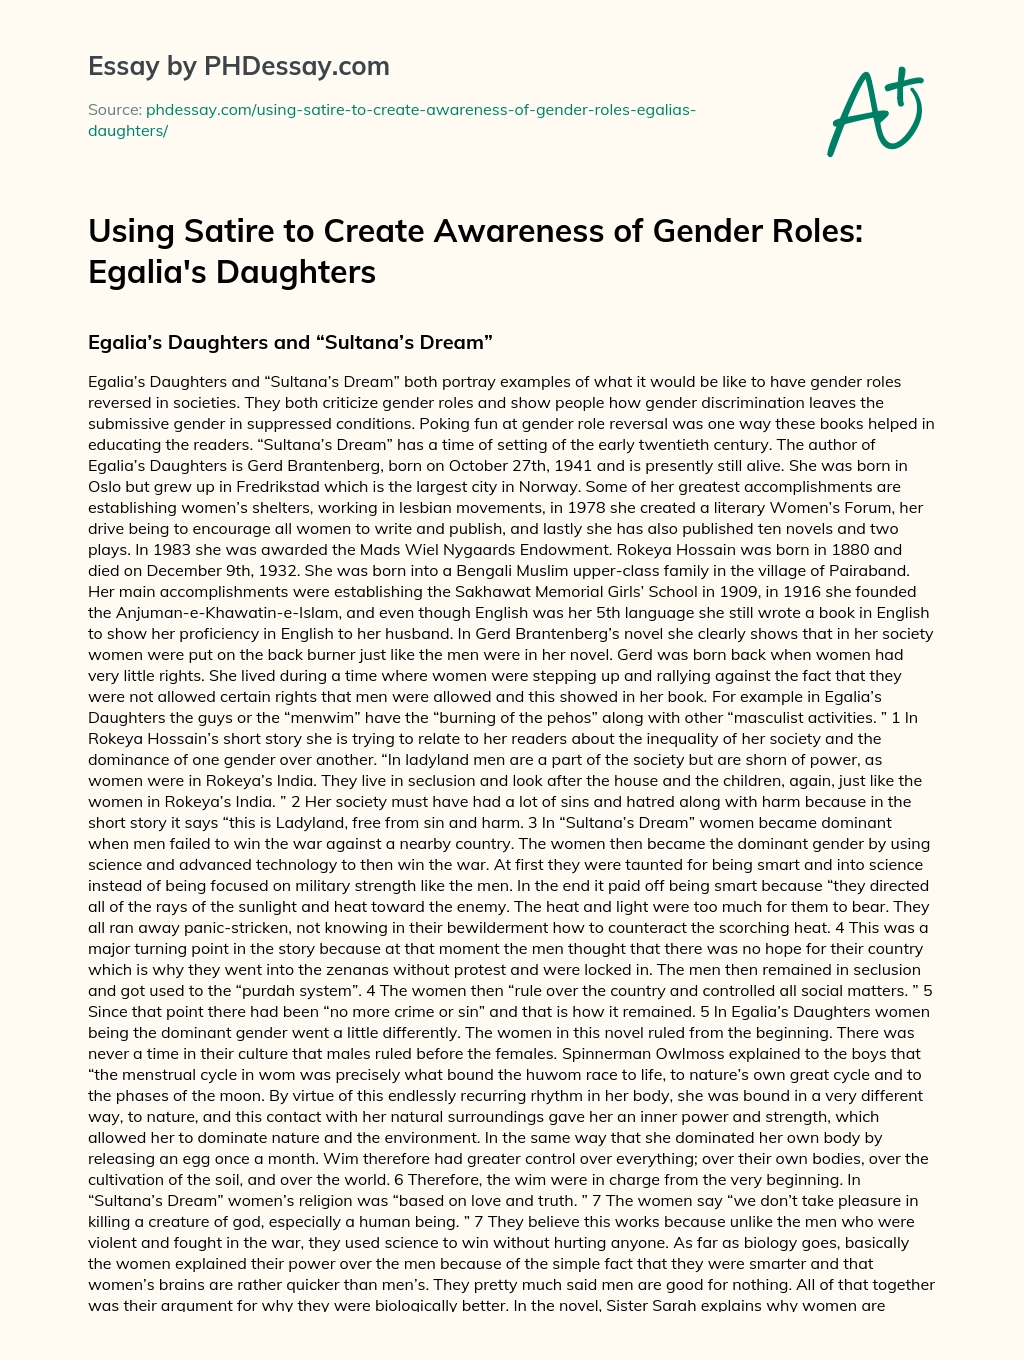 Using Satire to Create Awareness of Gender Roles: Egalia’s Daughters essay